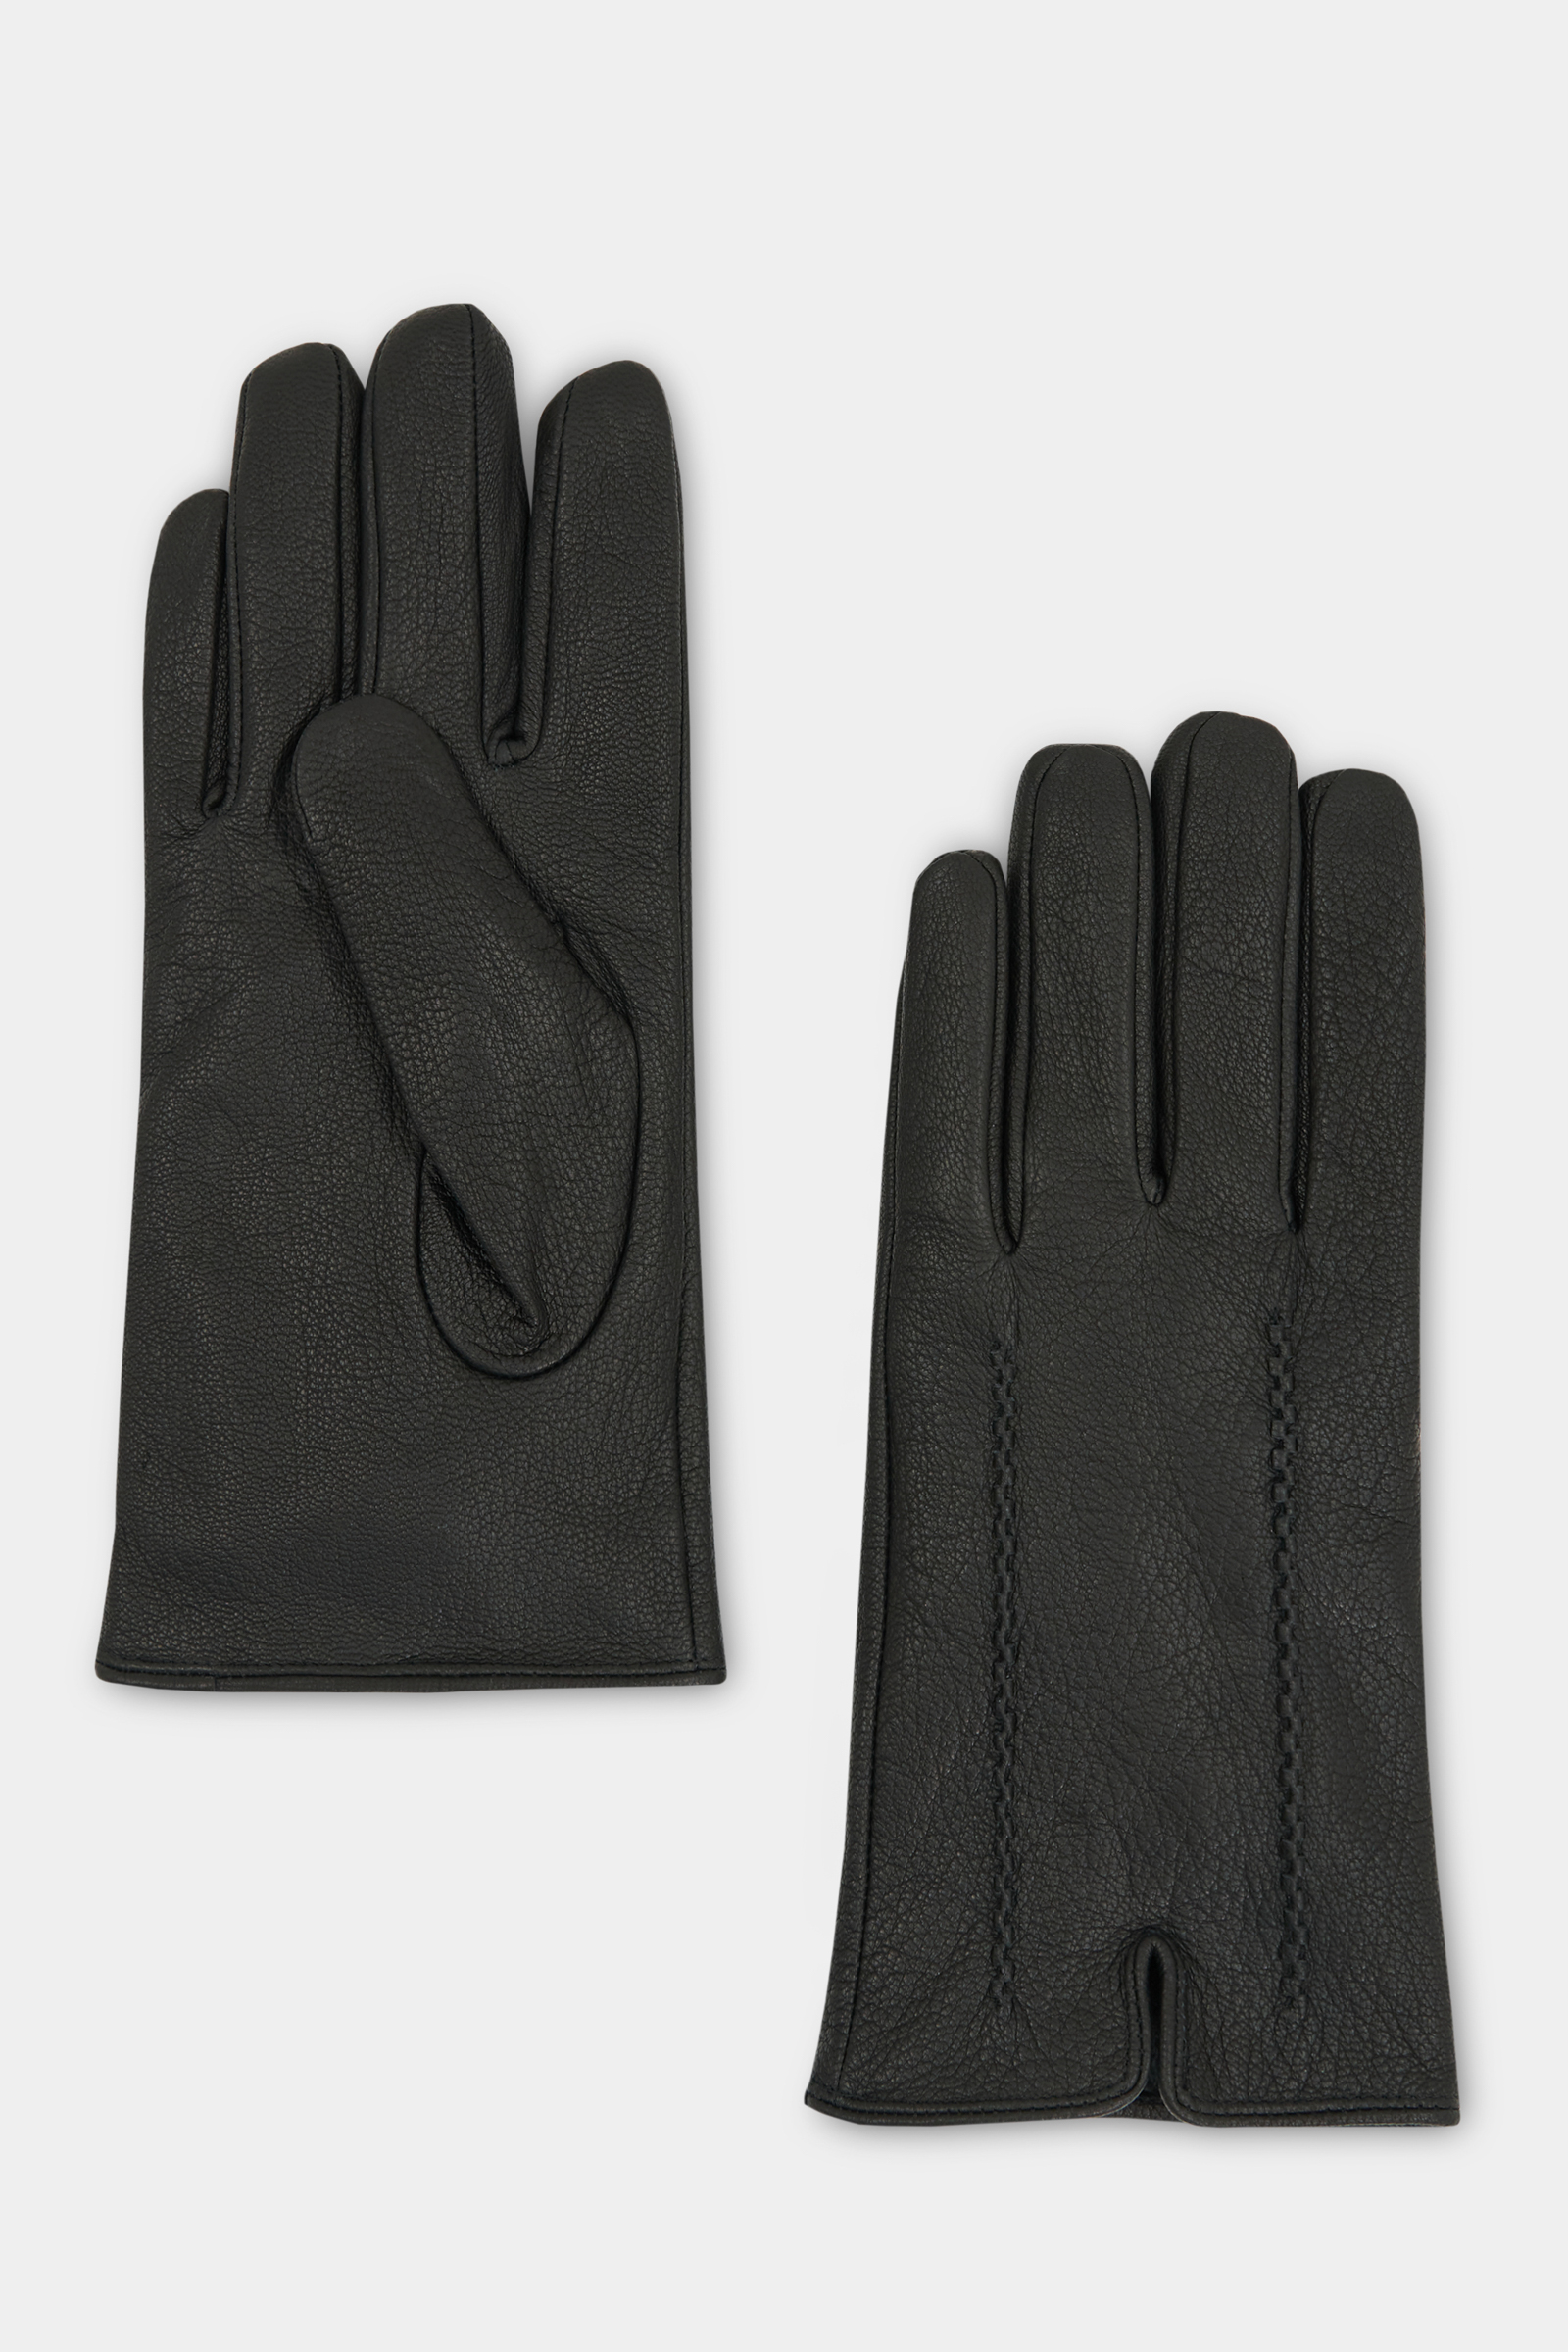 Перчатки мужские Finn Flare FAC21302 black, р. 8